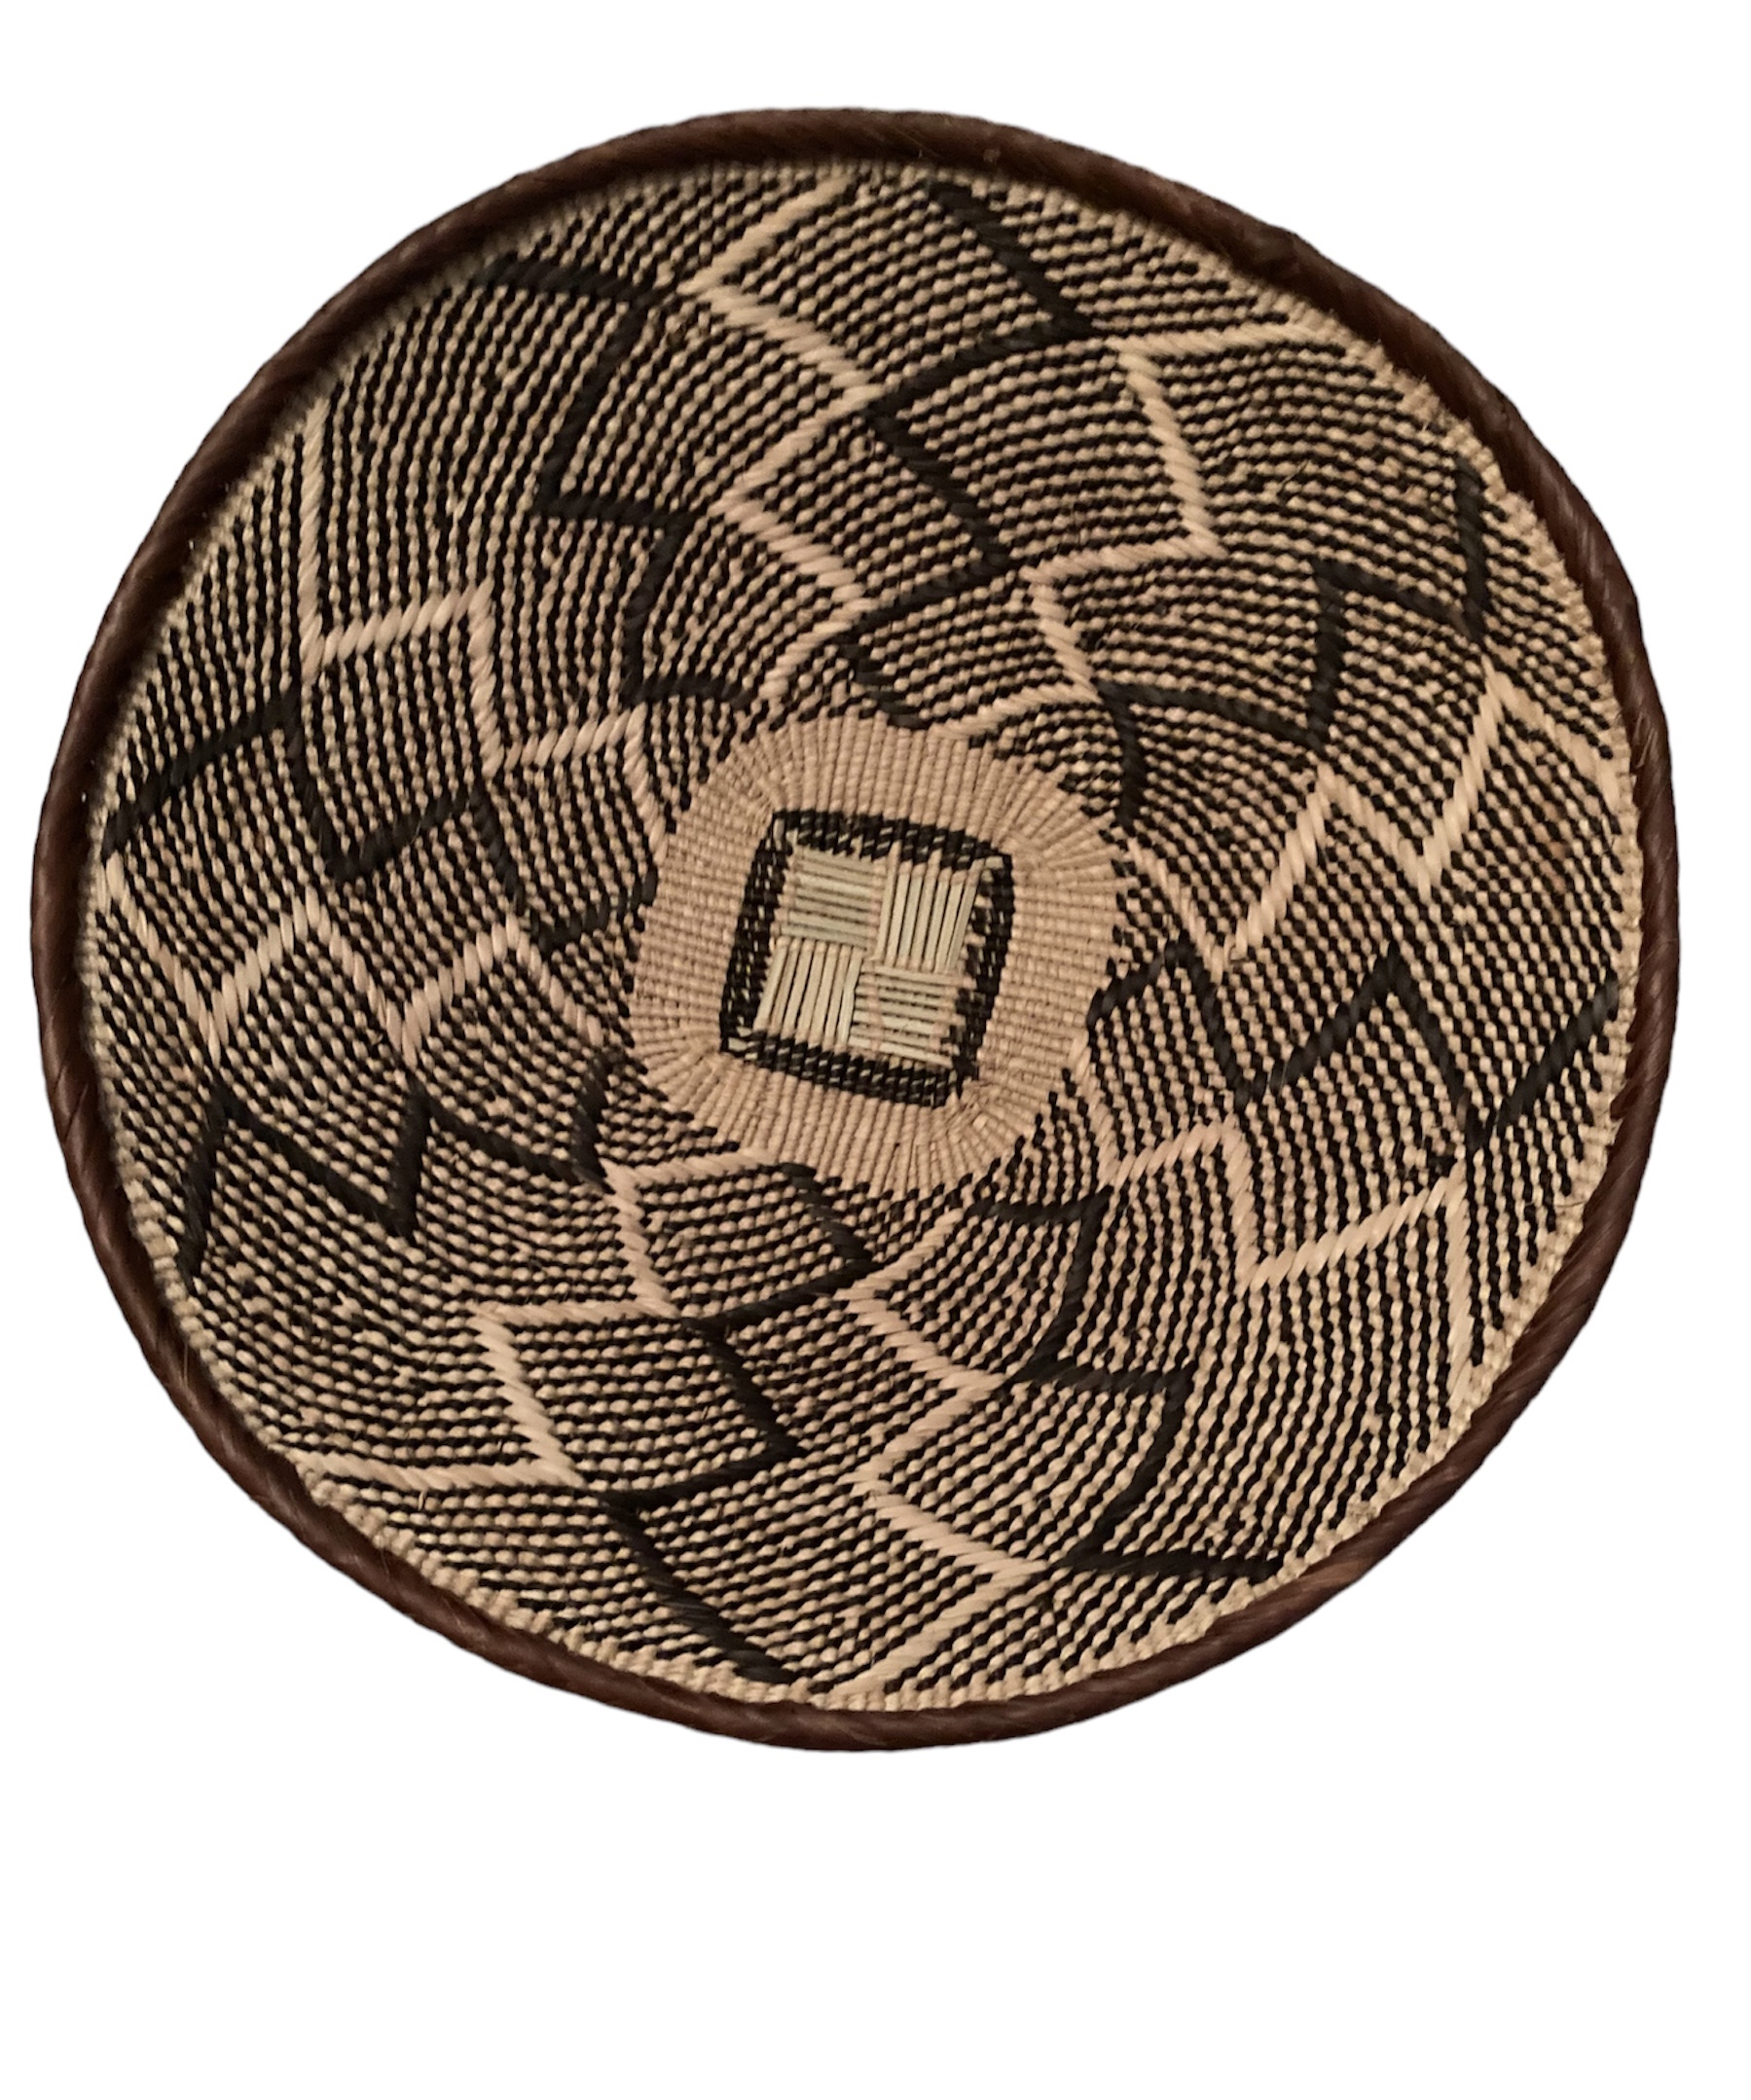 Tonga Basket from Zimbabwe - Design #034 - 14 1/2\" dia.